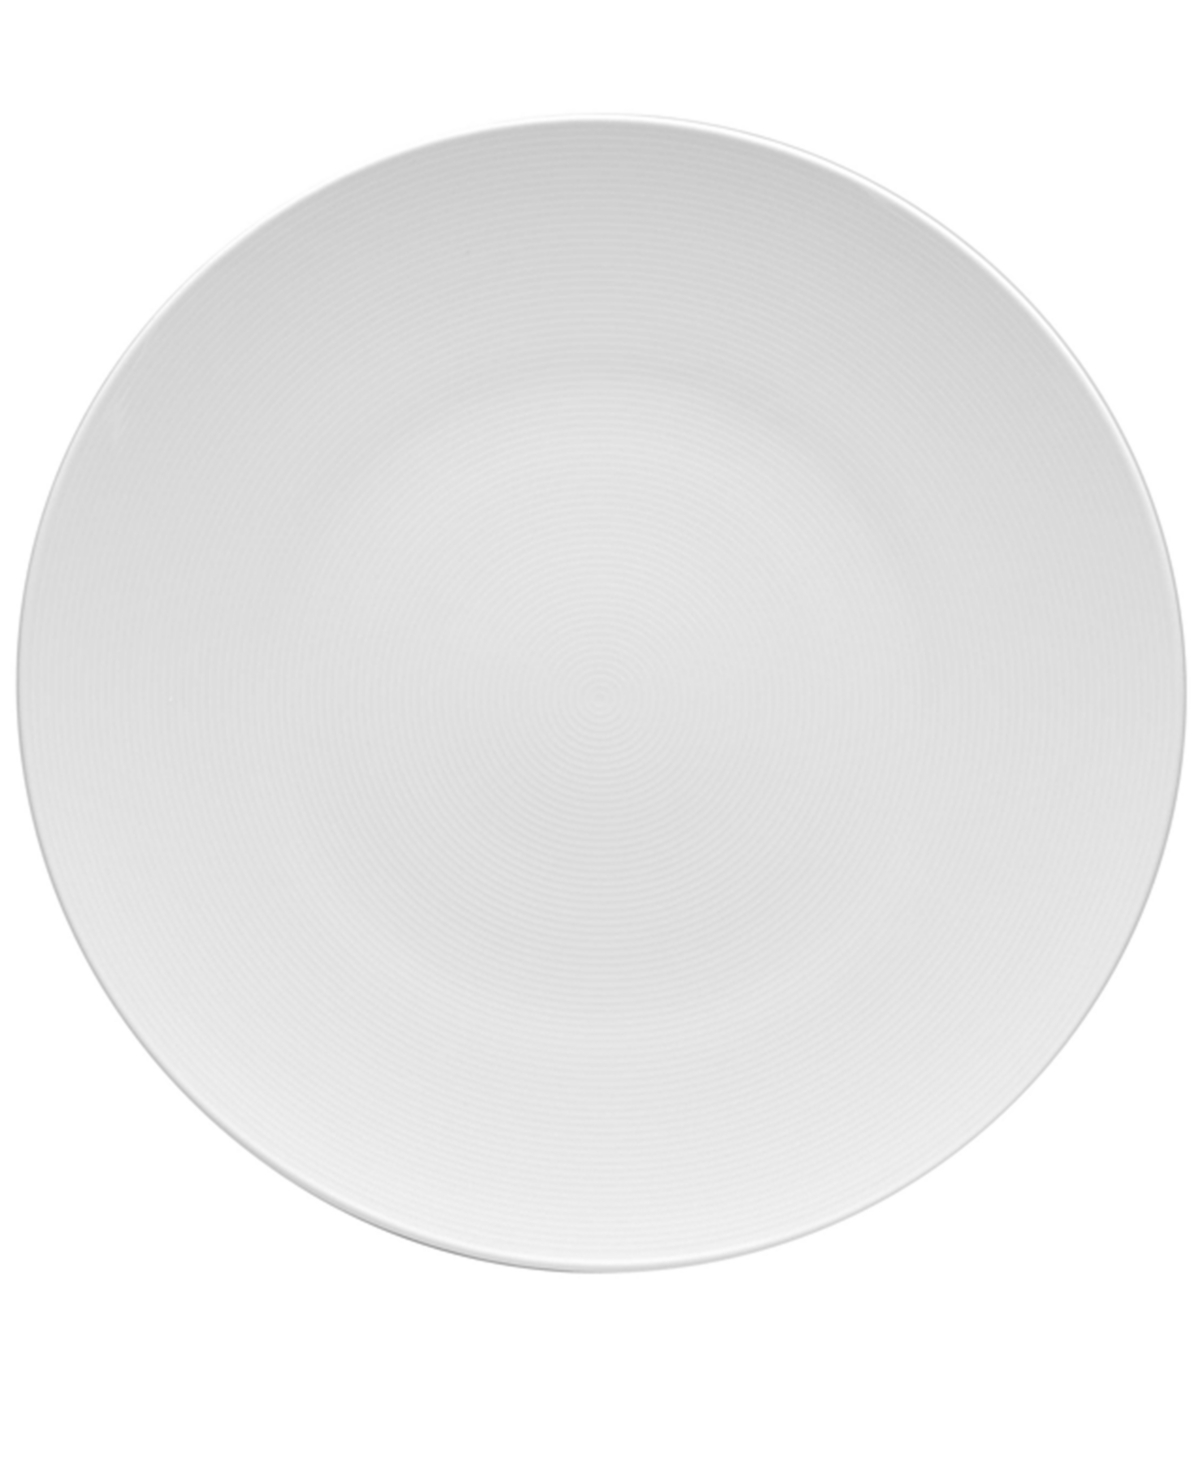 Thomas by Rosenthal Loft Service Plate - white